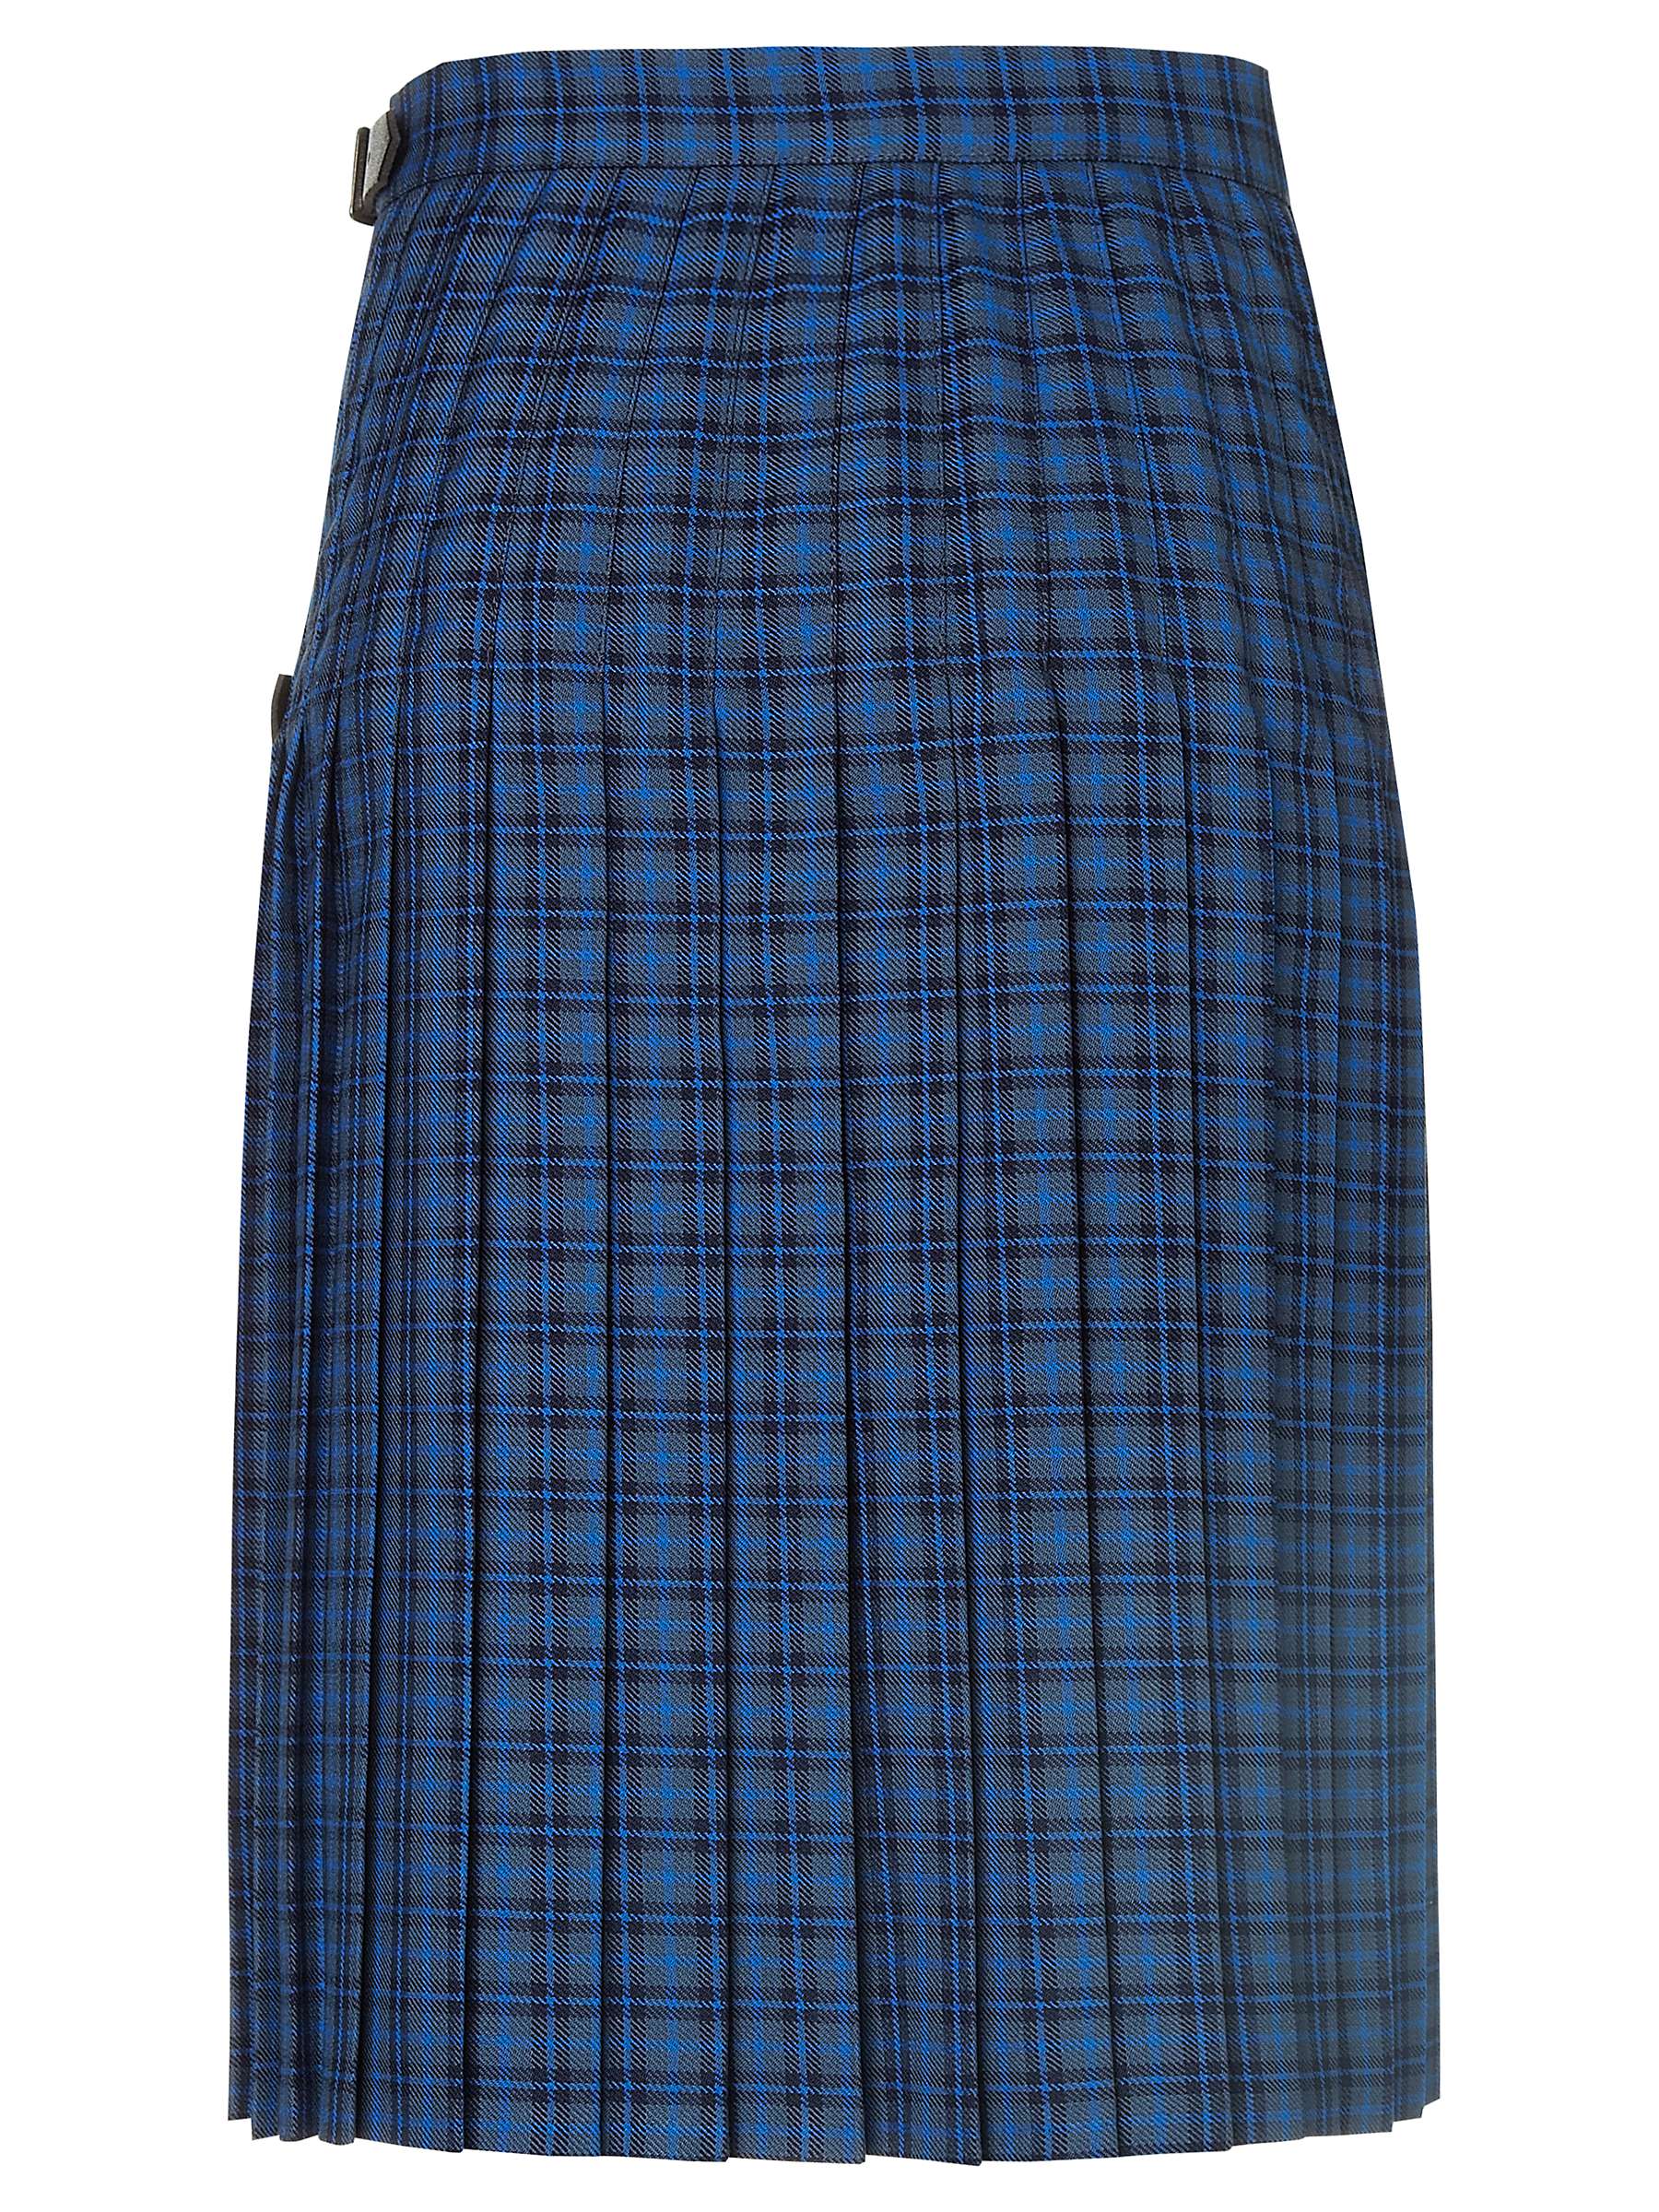 Buy Colfe's School Girls' Tartan Kilt, Blue/Multi Online at johnlewis.com